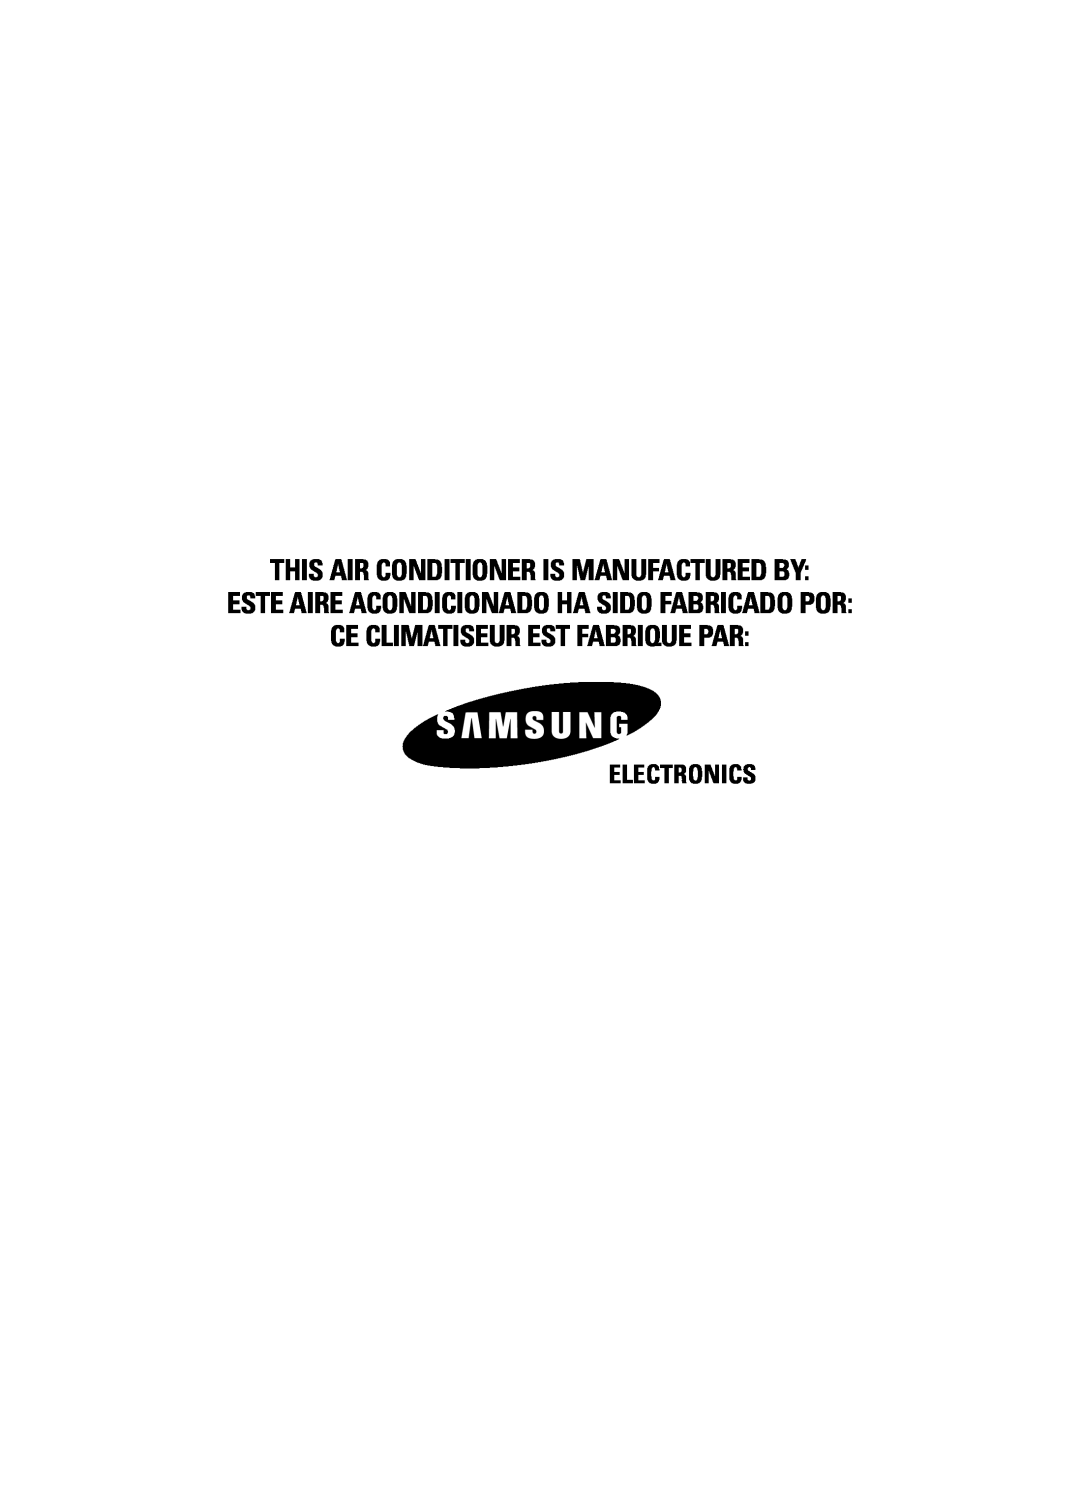 Samsung AS24A1(2)RCD This Air Conditioner Is Manufactured By, Este Aire Acondicionado Ha Sido Fabricado Por, Electronics 